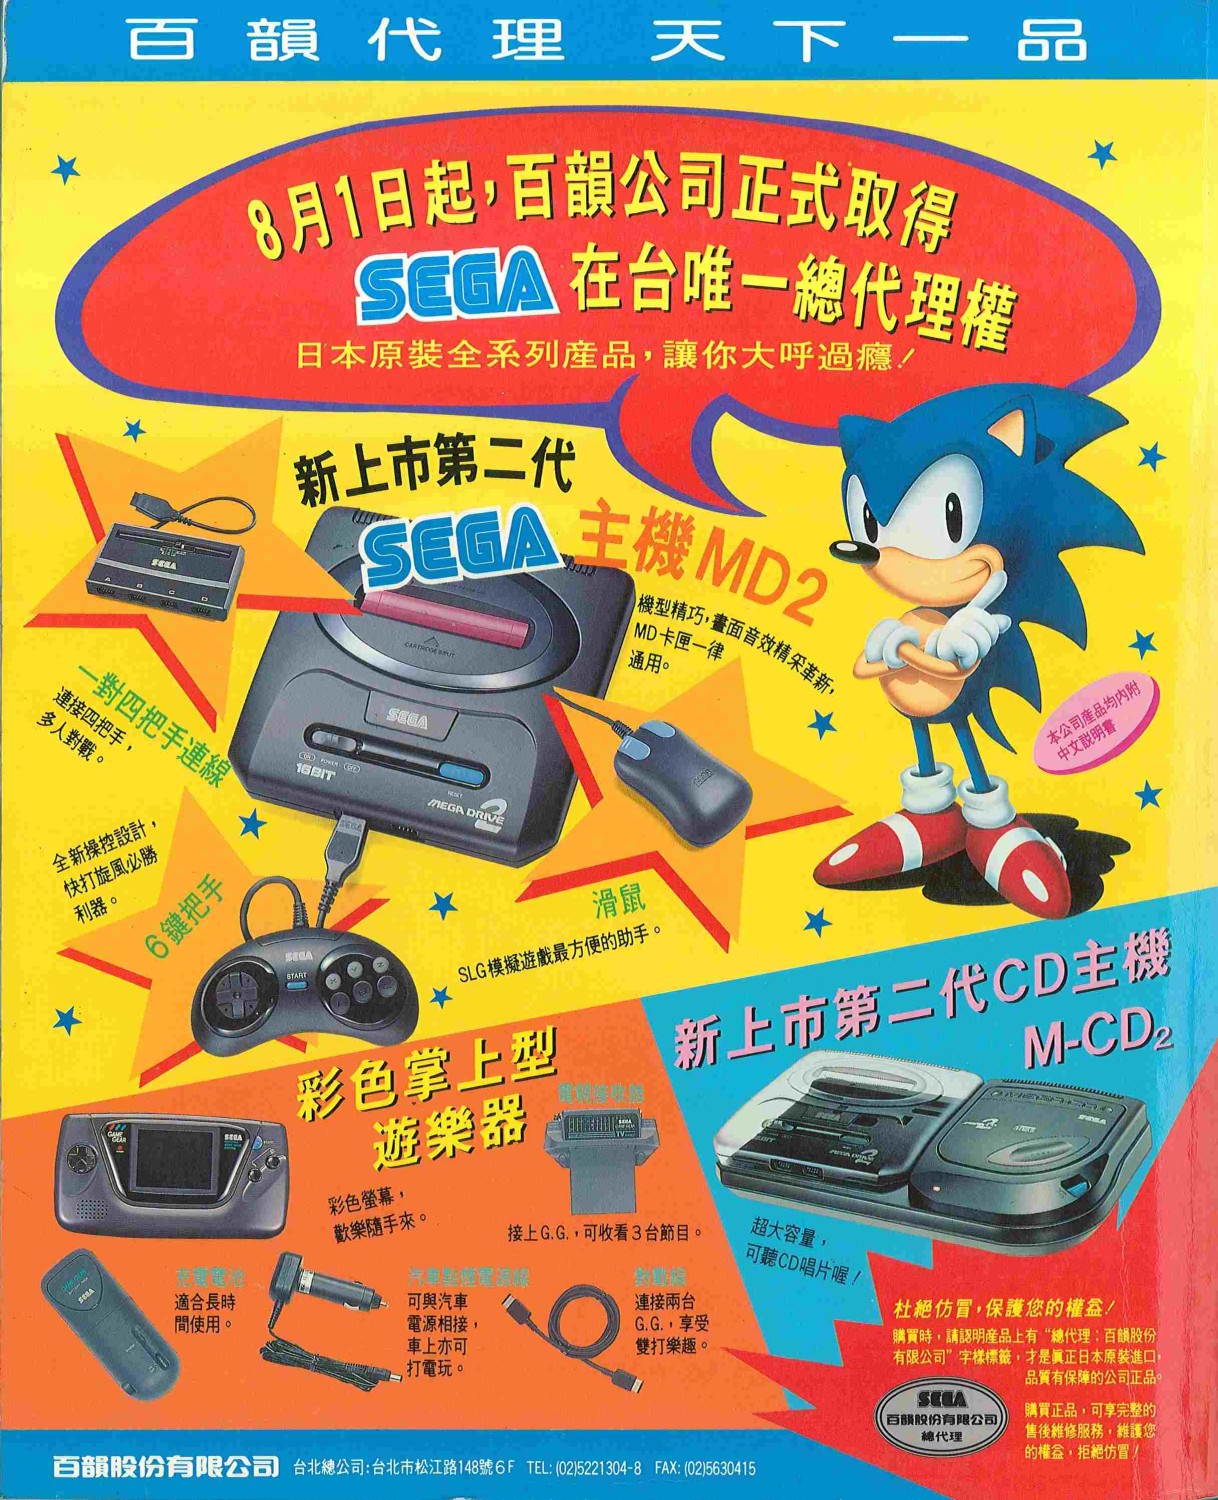 Sega TW advert PaiYuing.jpg